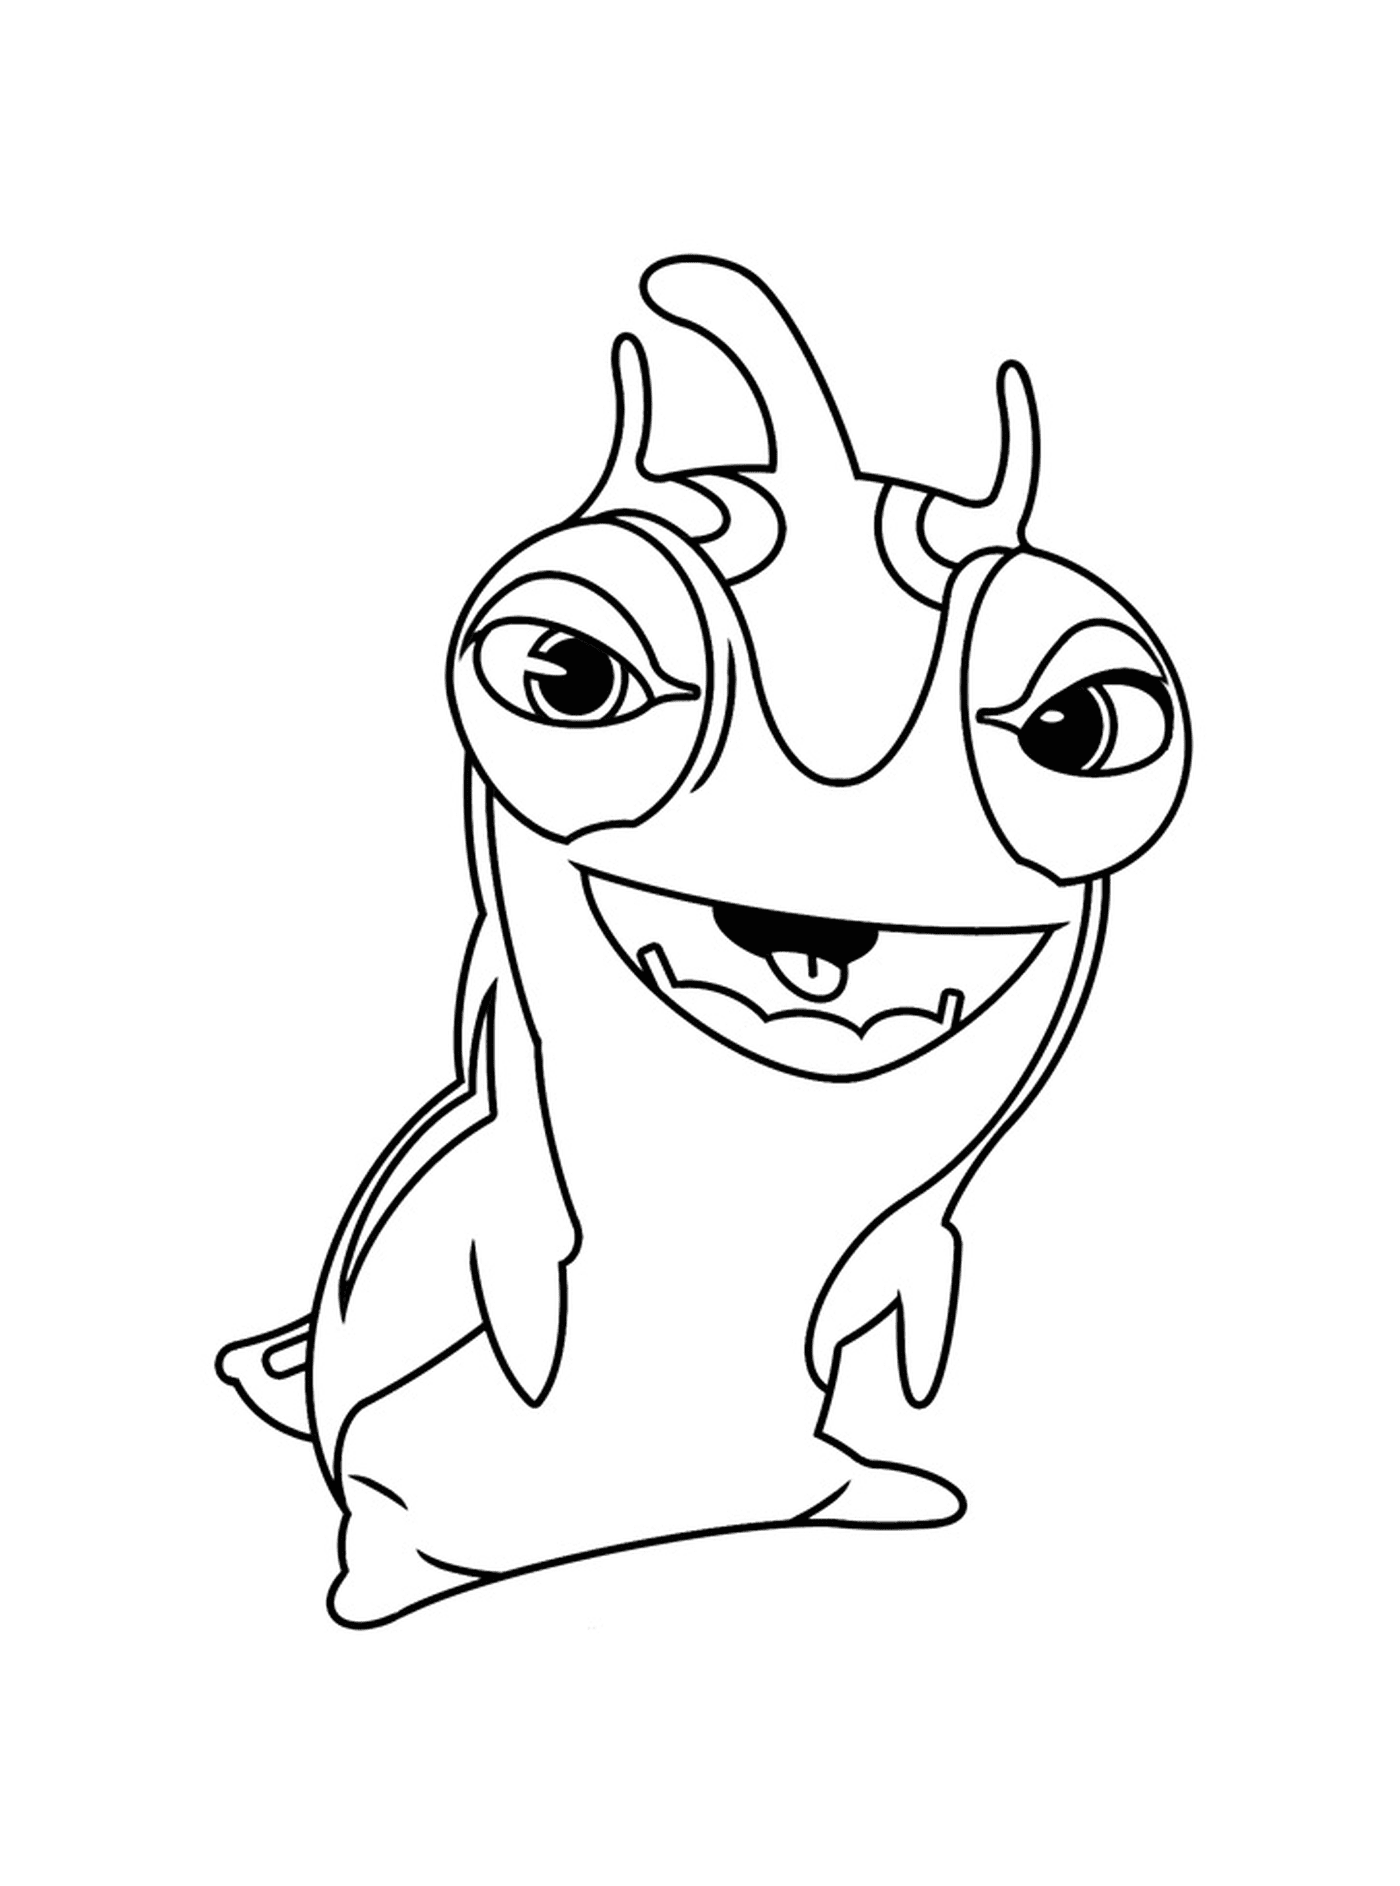  Flatulorhinkus, carino personaggio dei cartoni animati 